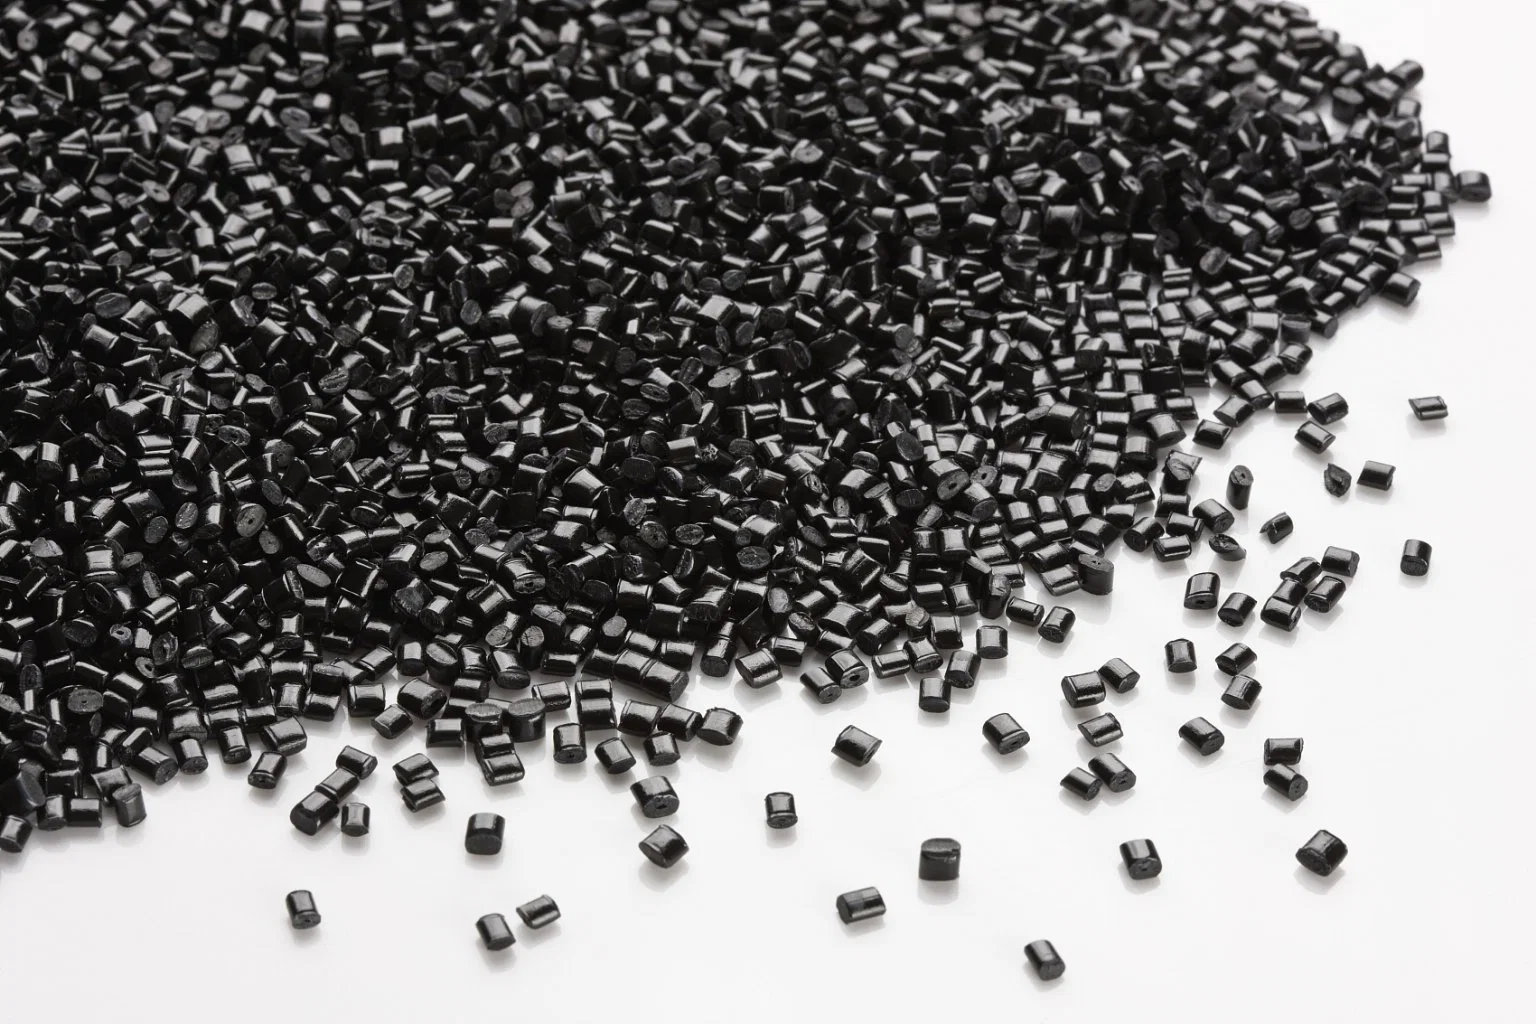 Ketjen Leitfähige Pigment Gummi Aktiviert Srf Automotive Coating Hop Level Oxidized Carbon Black Einecs 215-609-9